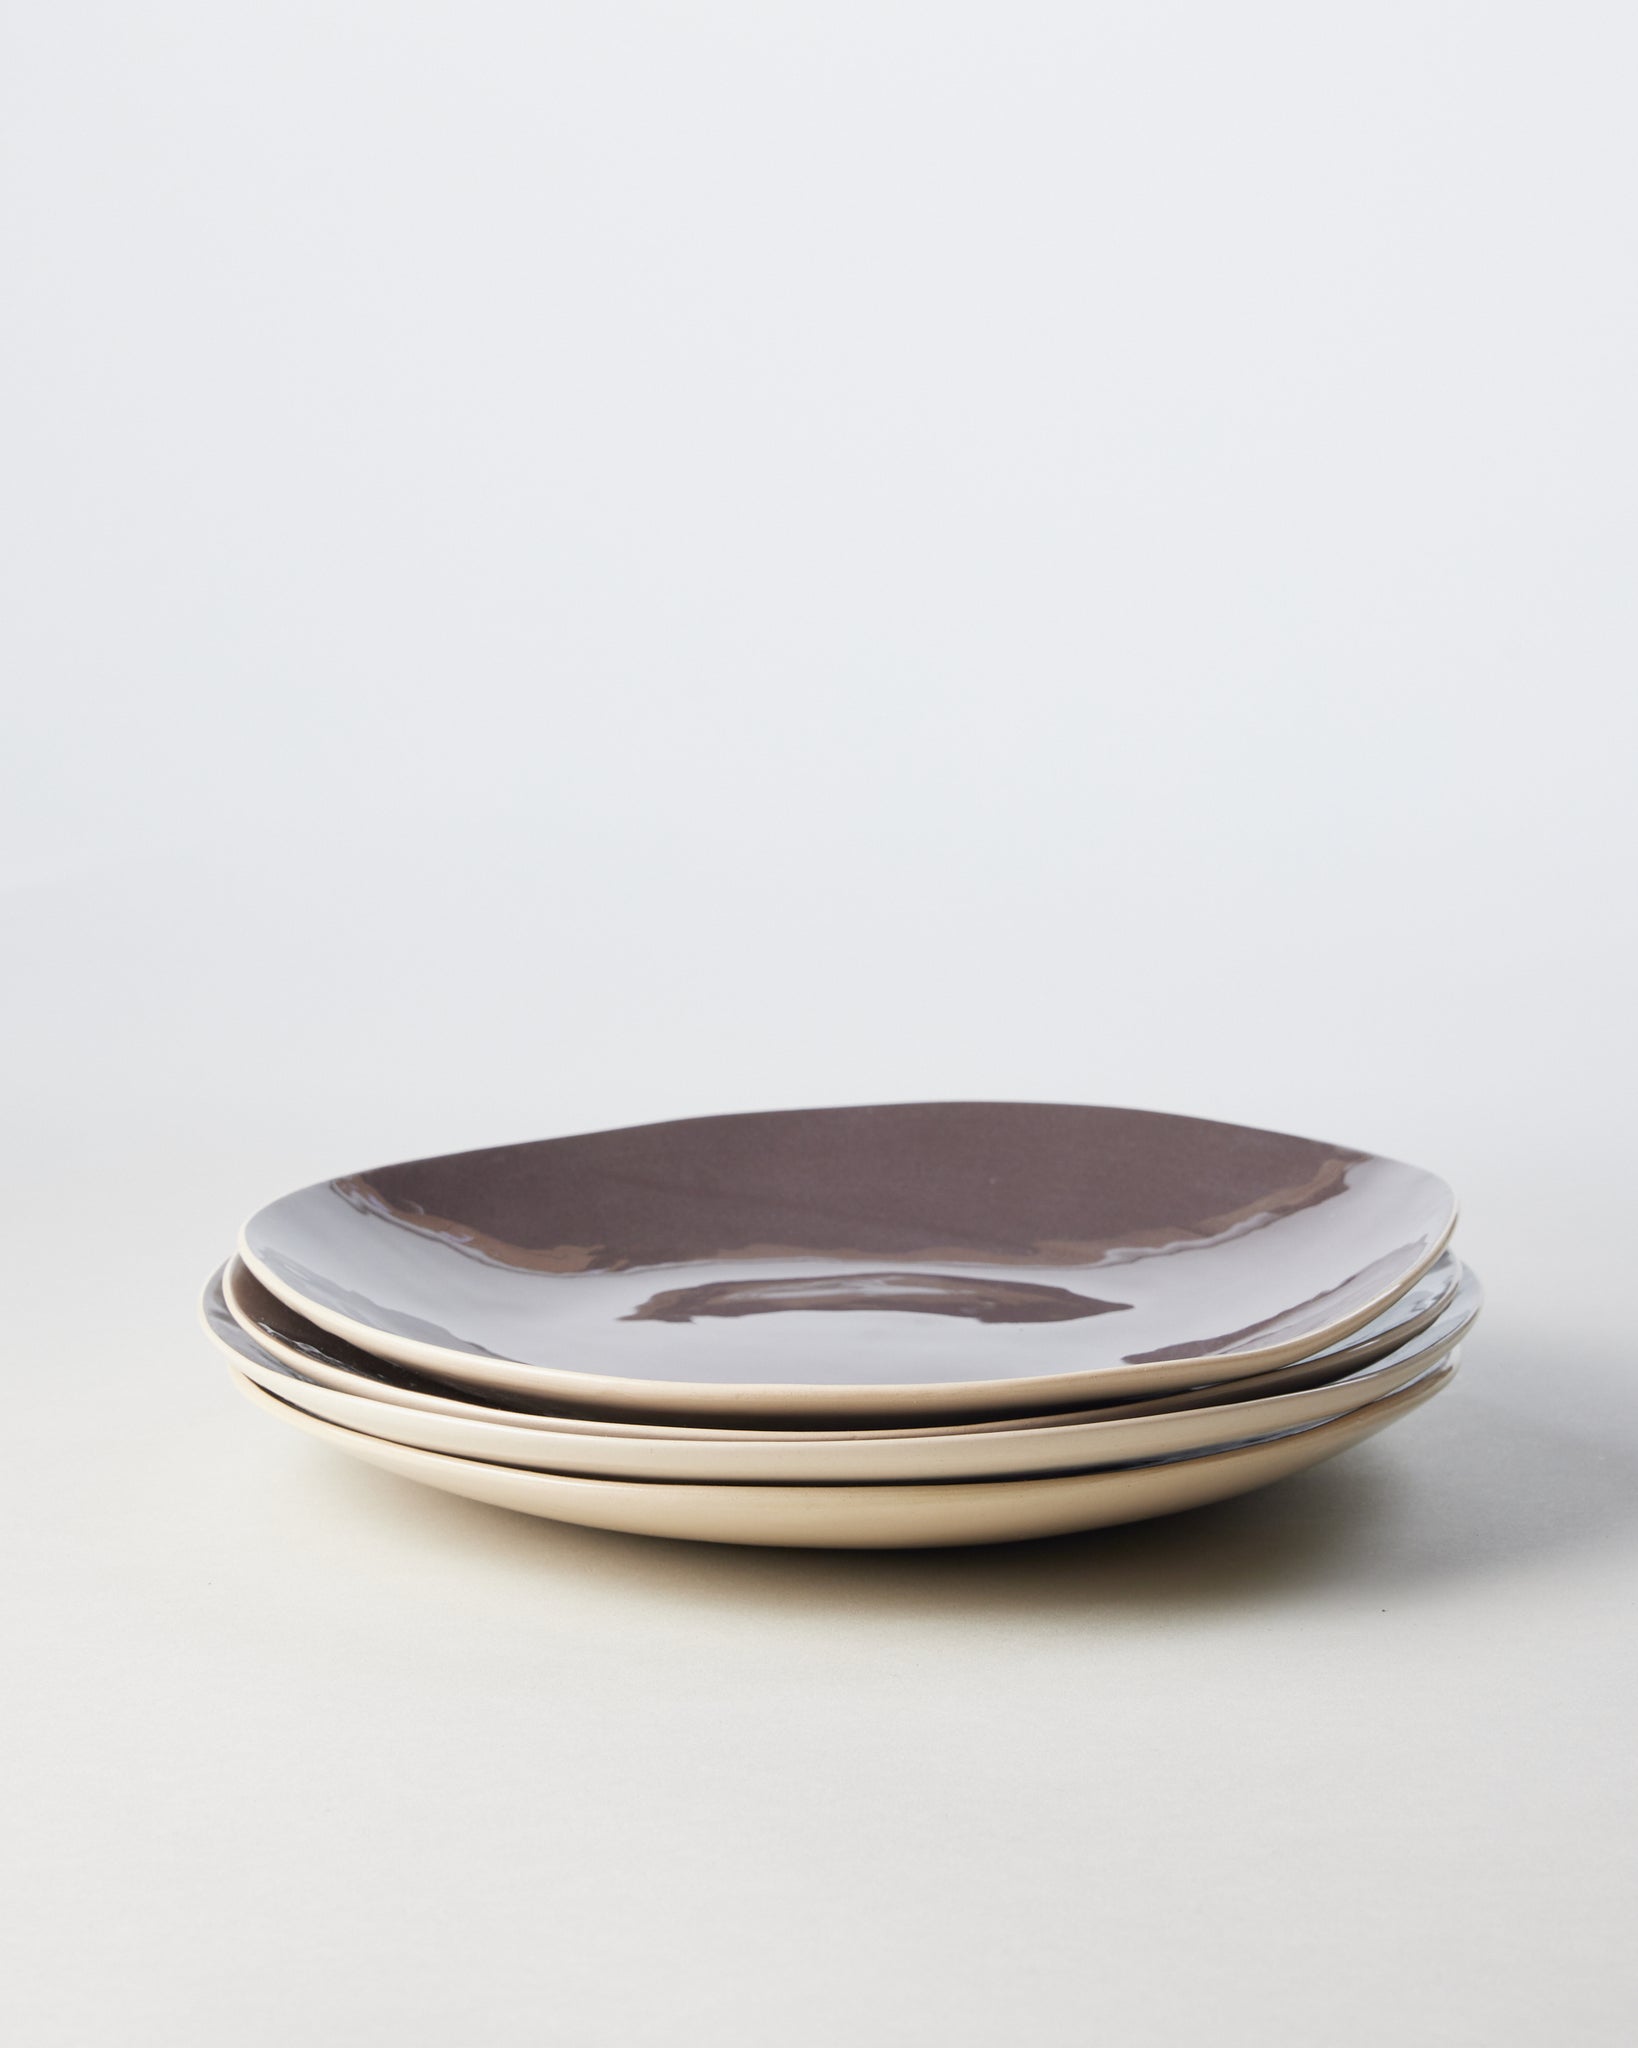 Medium Plate in Cocoa